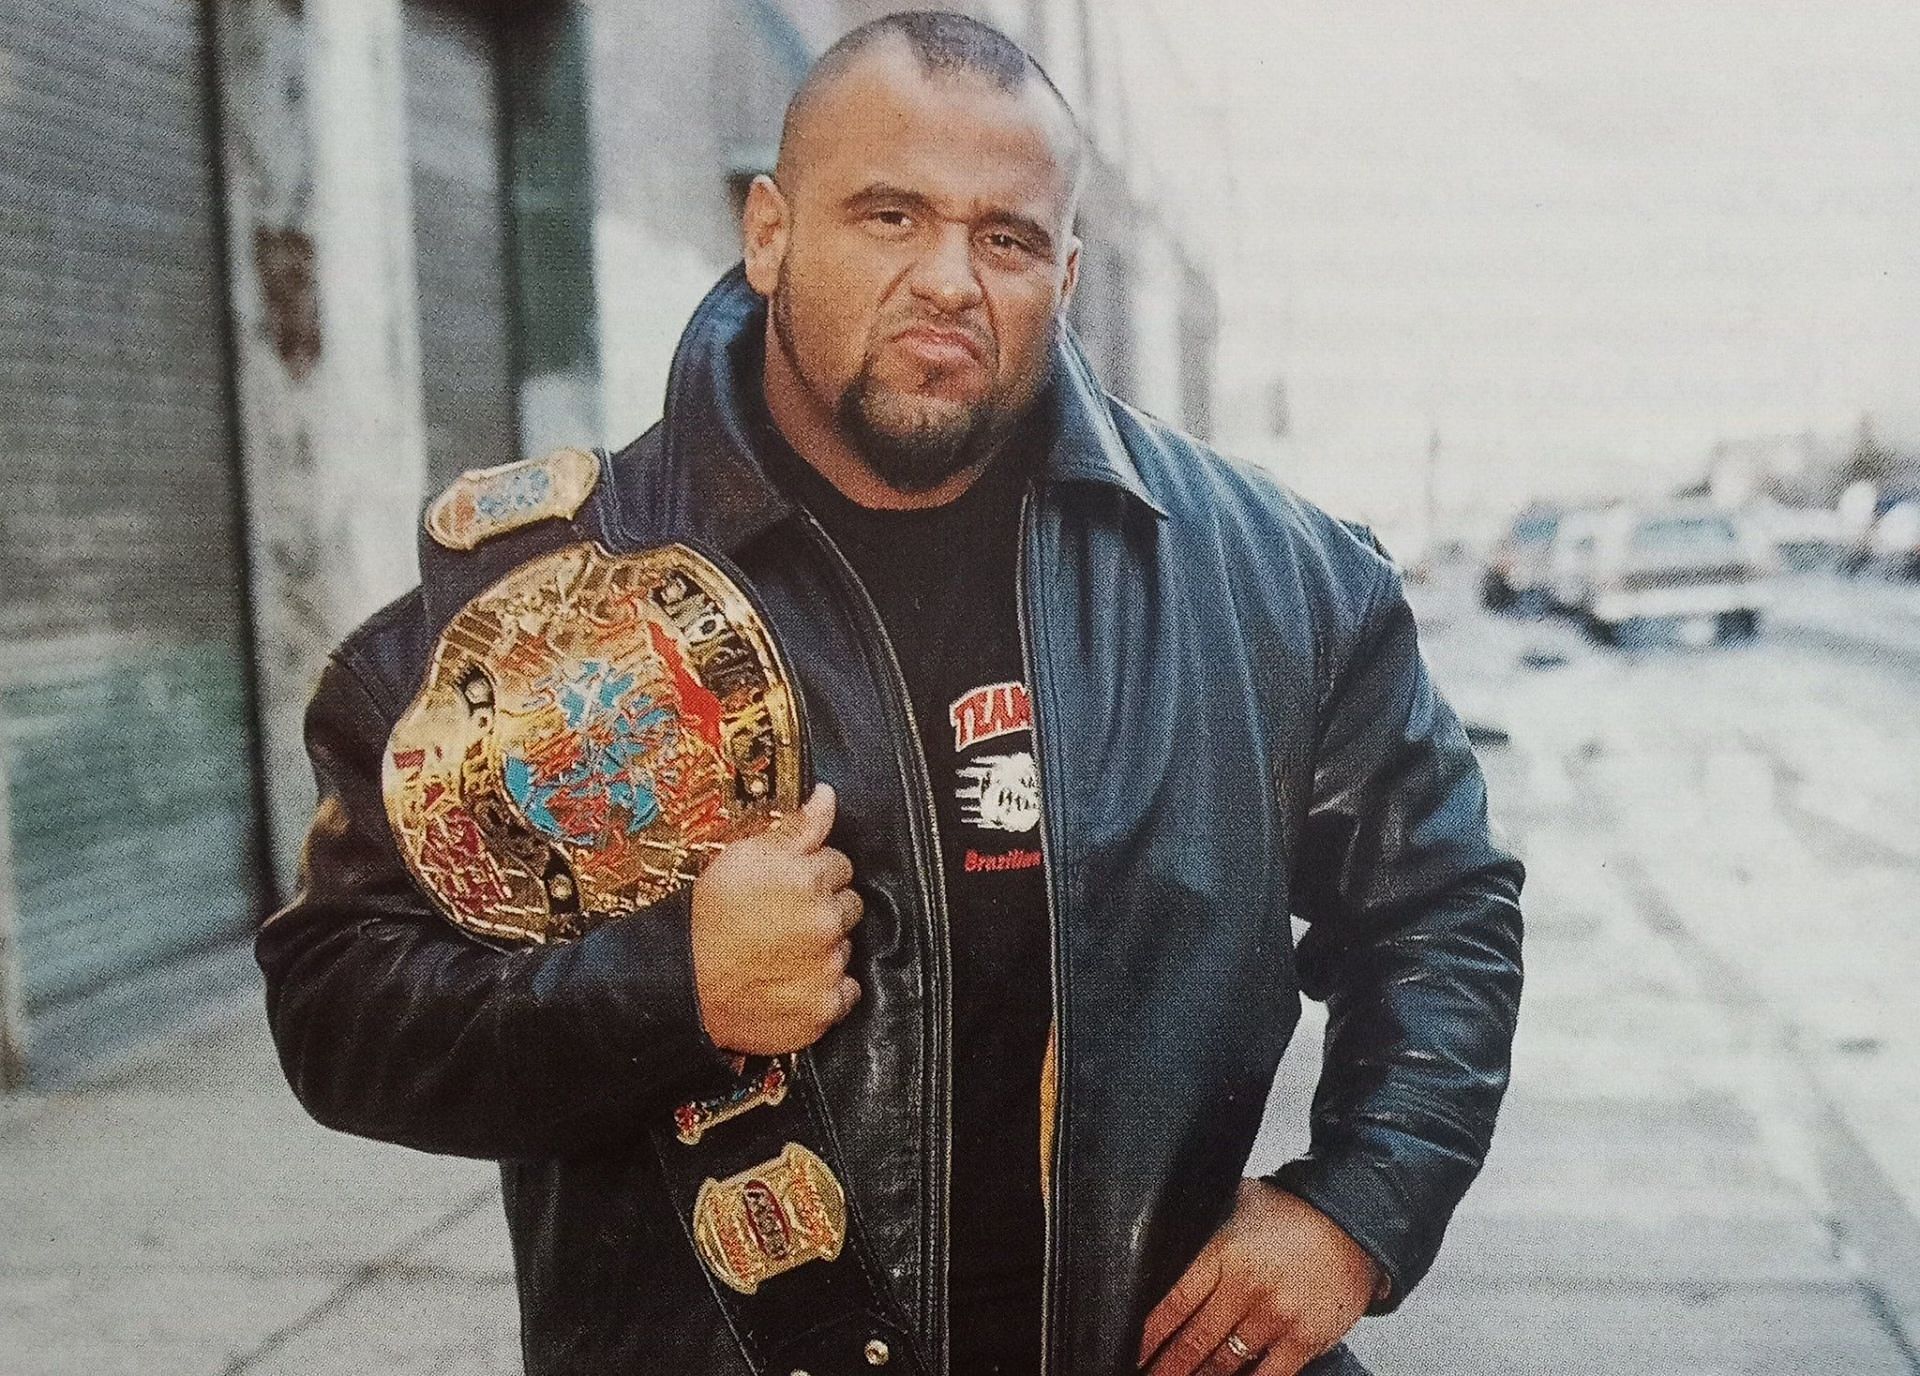 The Human Suplex Machine as the ECW Champion.